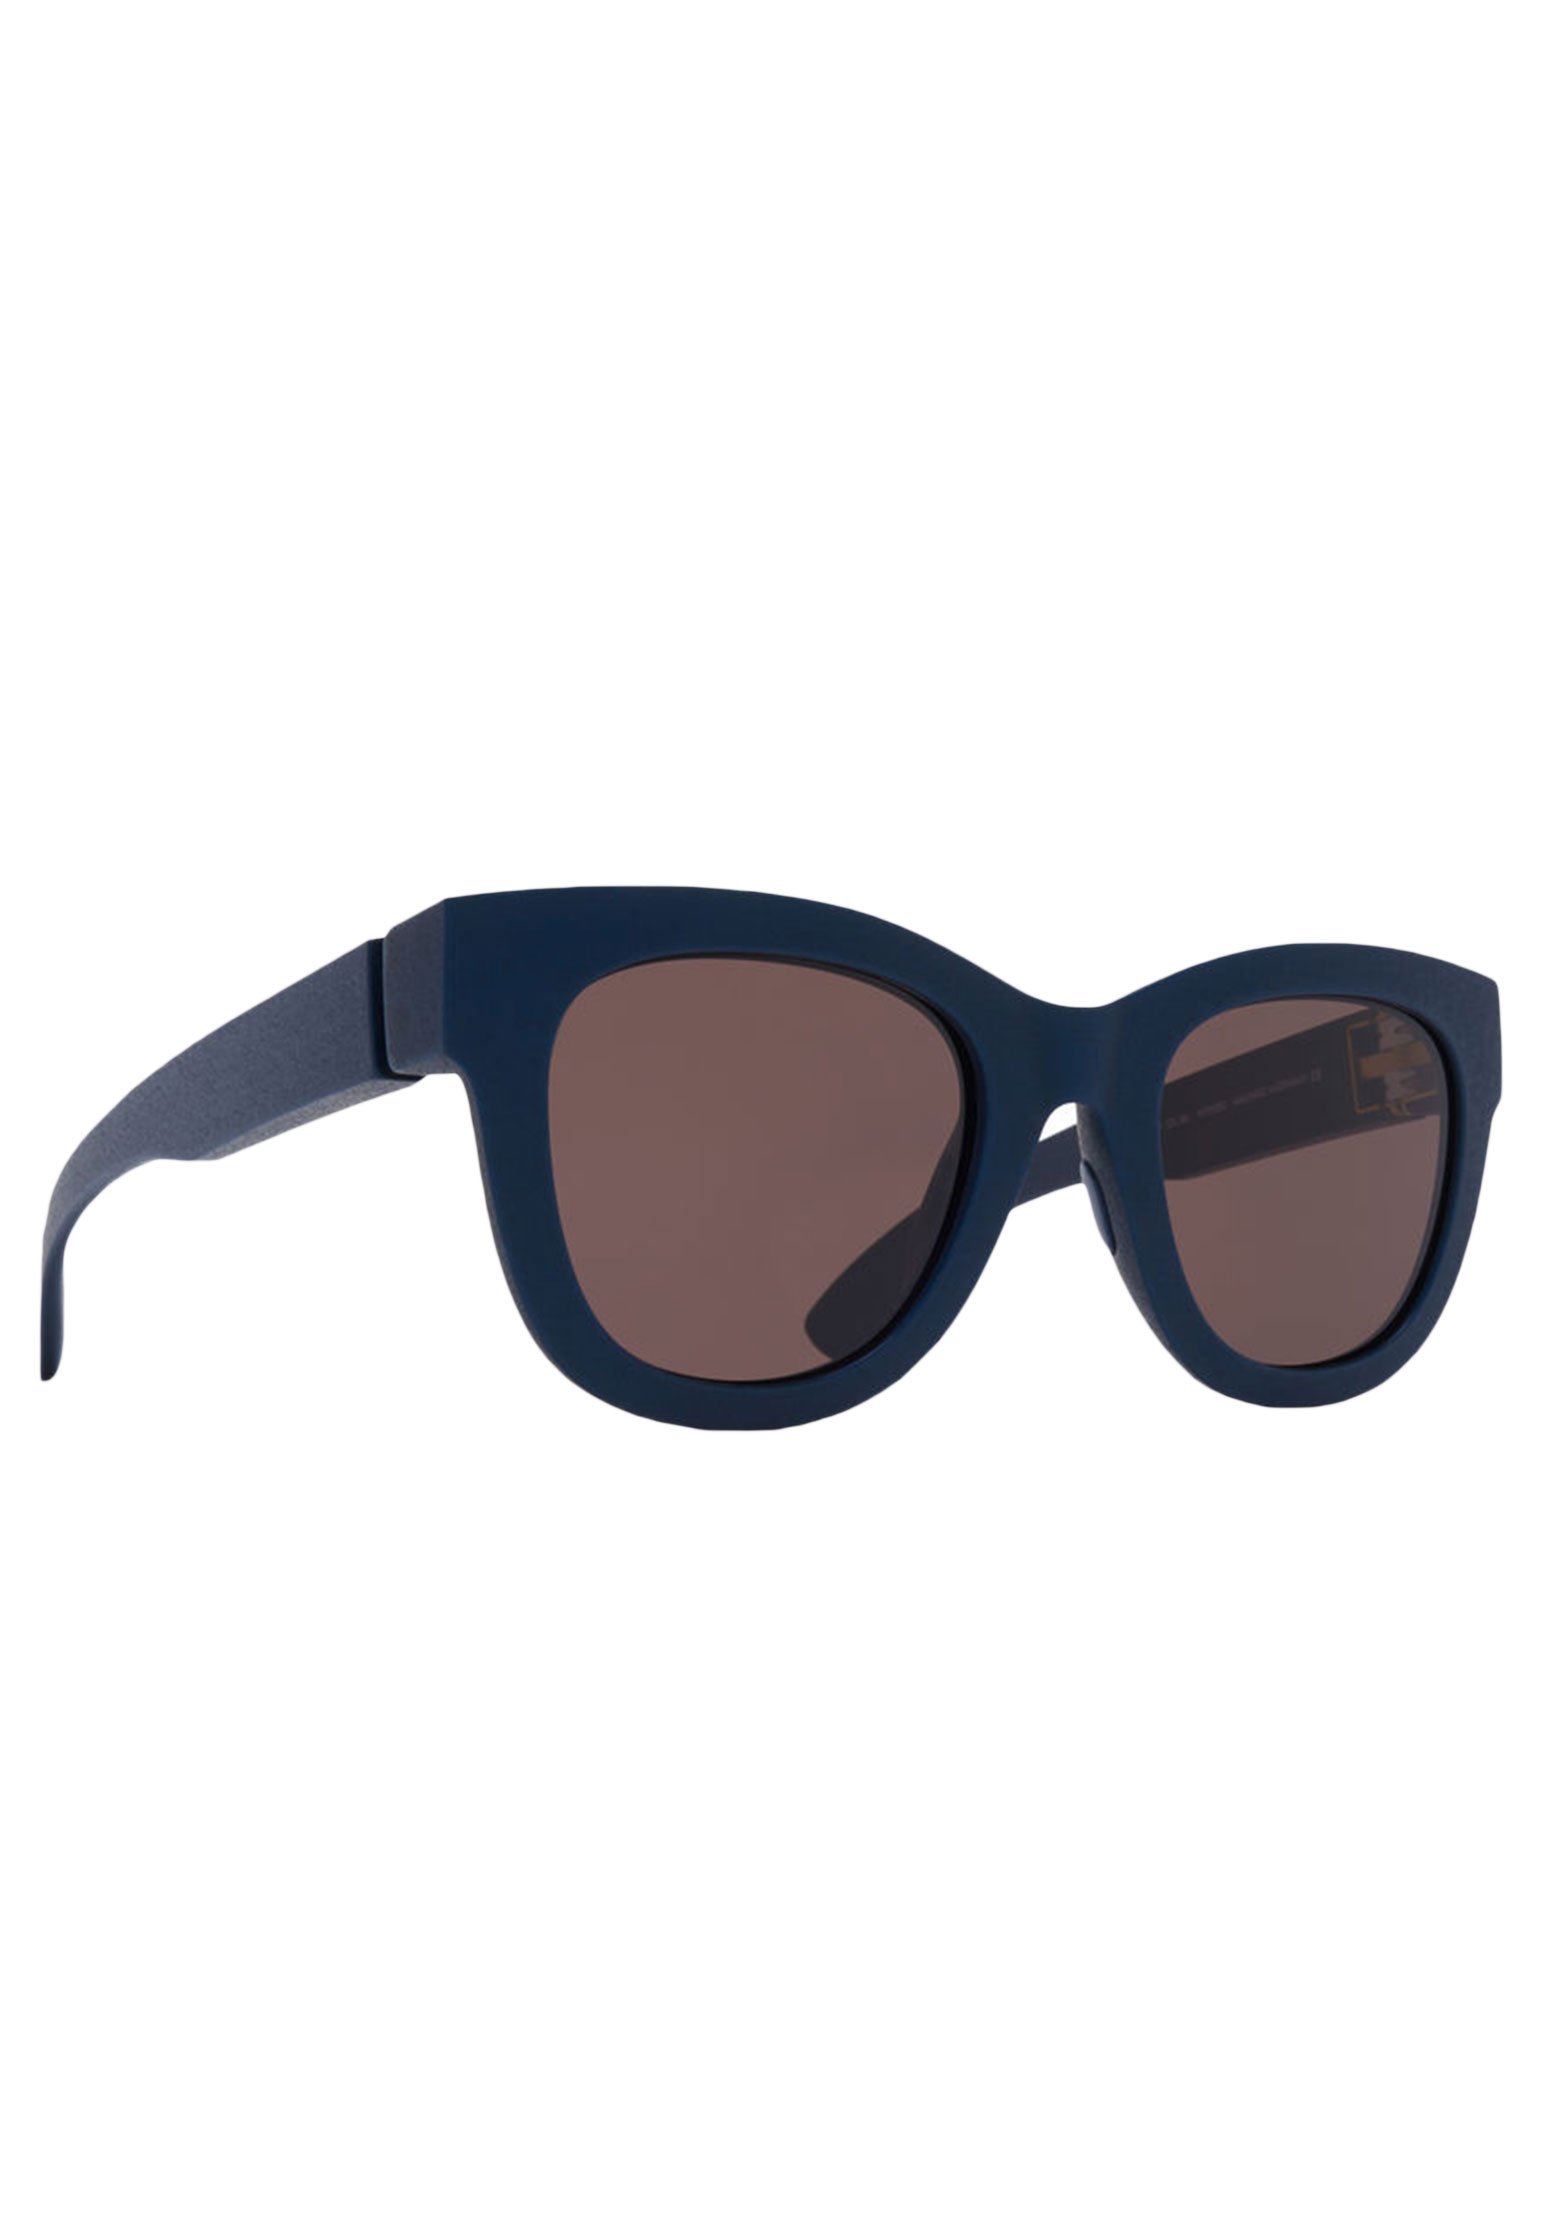 Sunglasses MYKITA Color: brown (Code: 228) in online store Allure